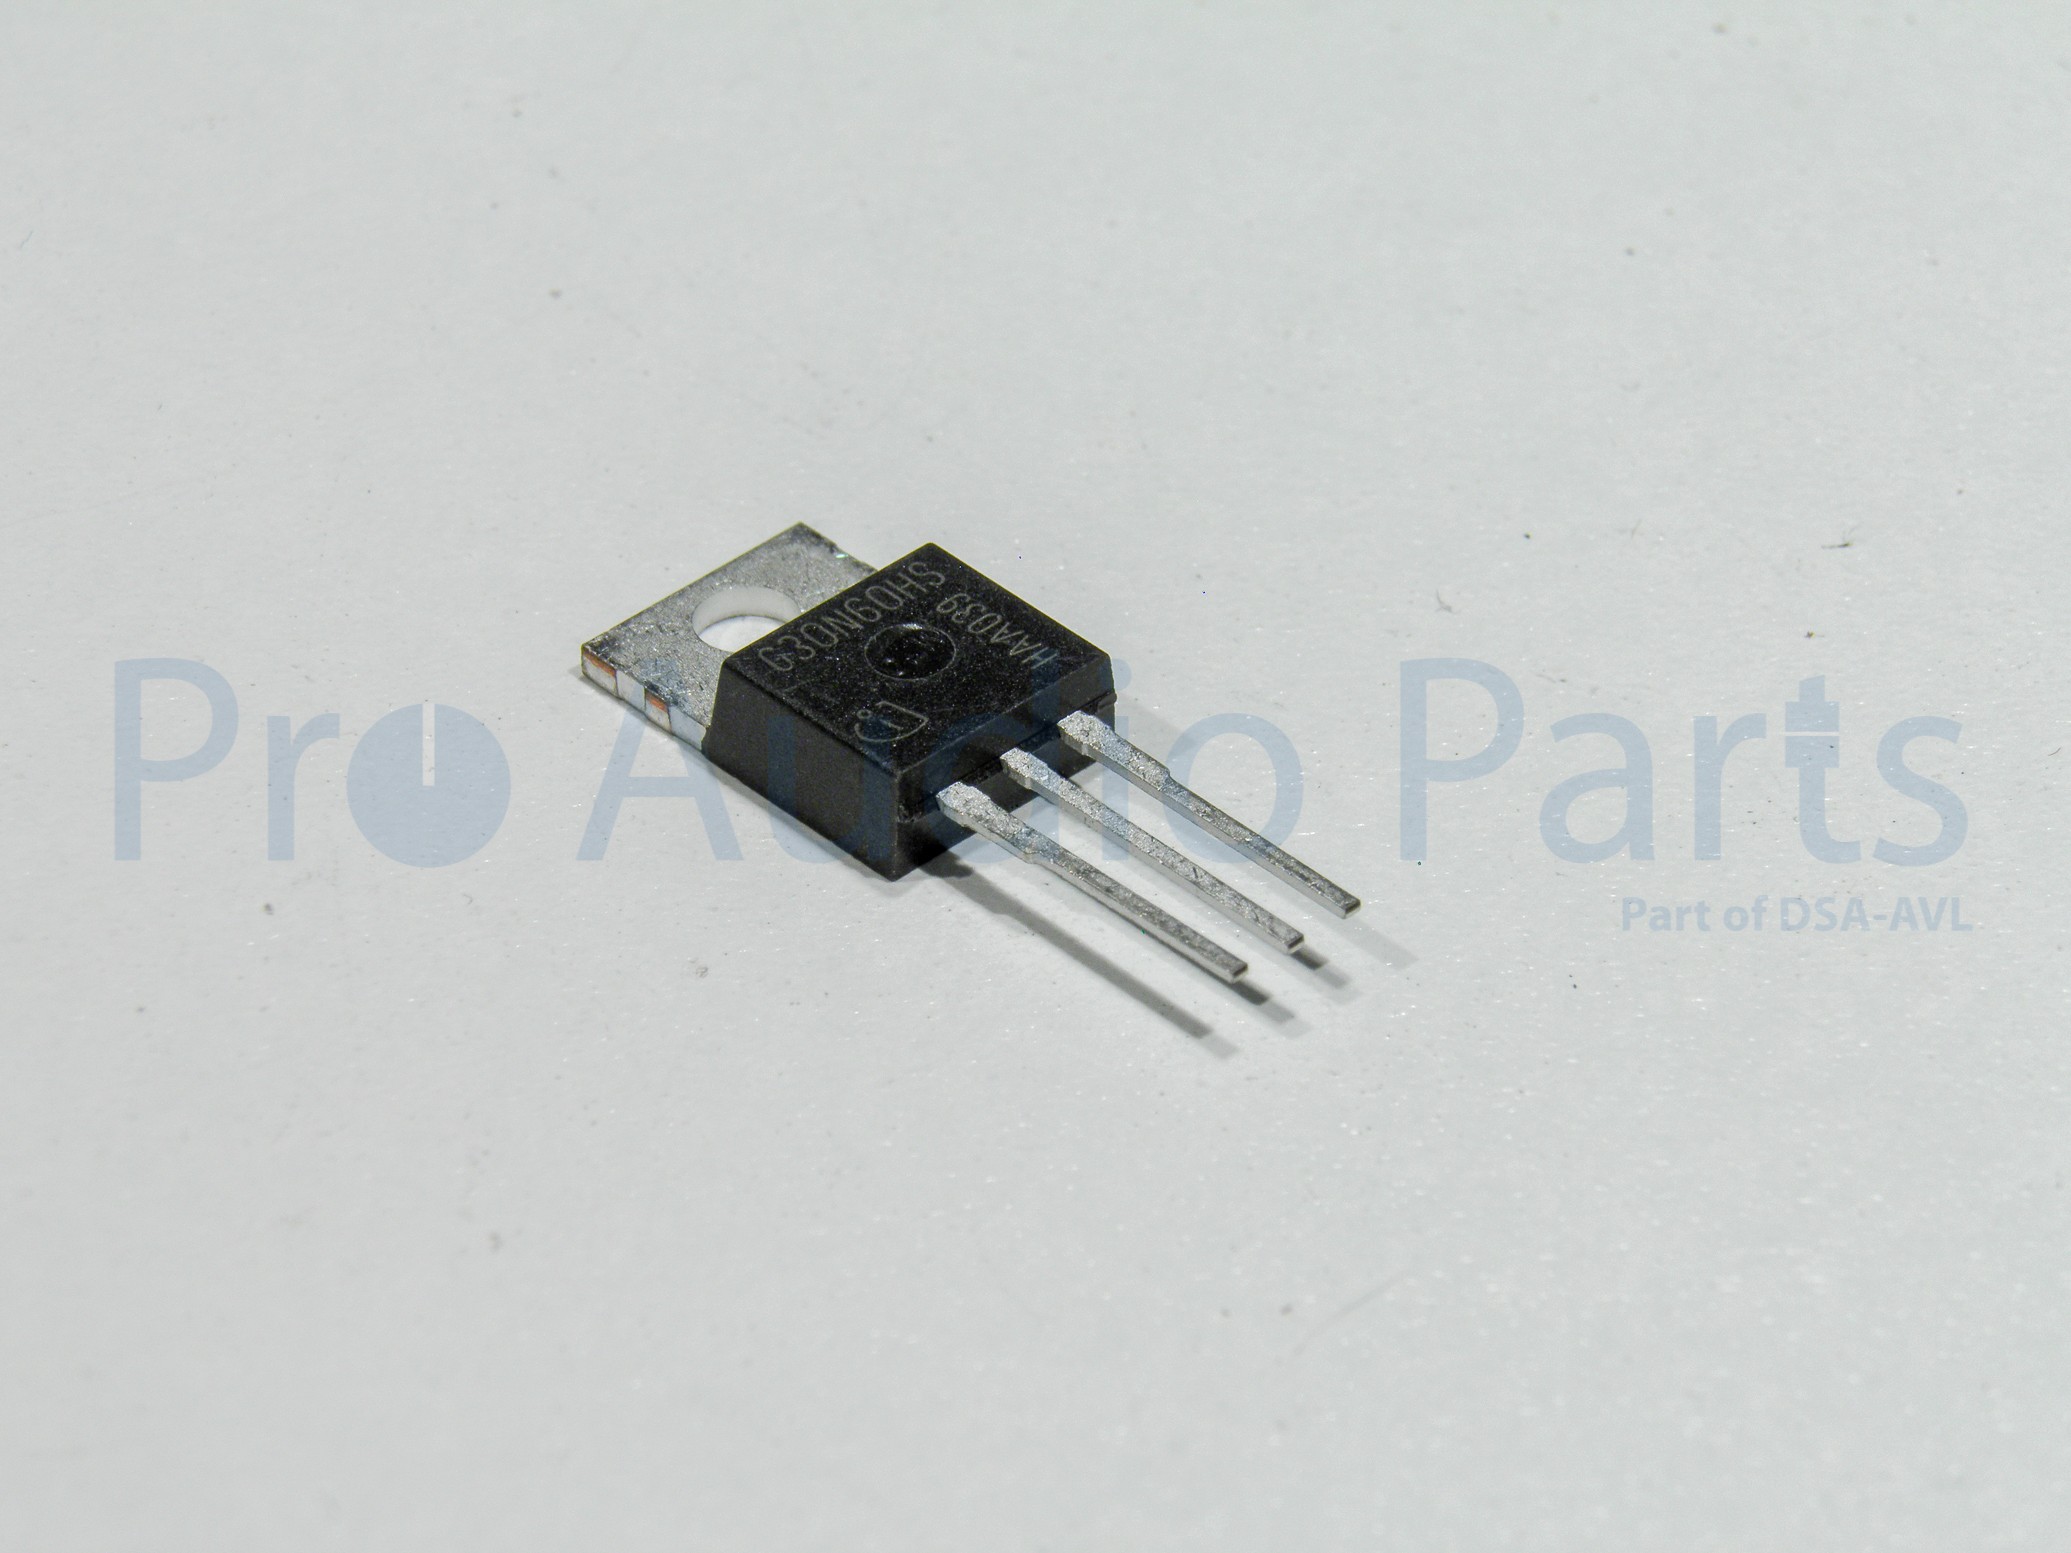 Transistor G30N60 o.a. Crown DCi 2|2400N, DCi 4|2400N, IT12000HD,  IT4000, IT5000HD, IT6000, IT8000, T9000HD,  ITHD, MA12000i , MA5000i,  MA9000i Obsolete TO-220 uitvoering ( end of life) Crown part nummer 136291-1 & 138497-1